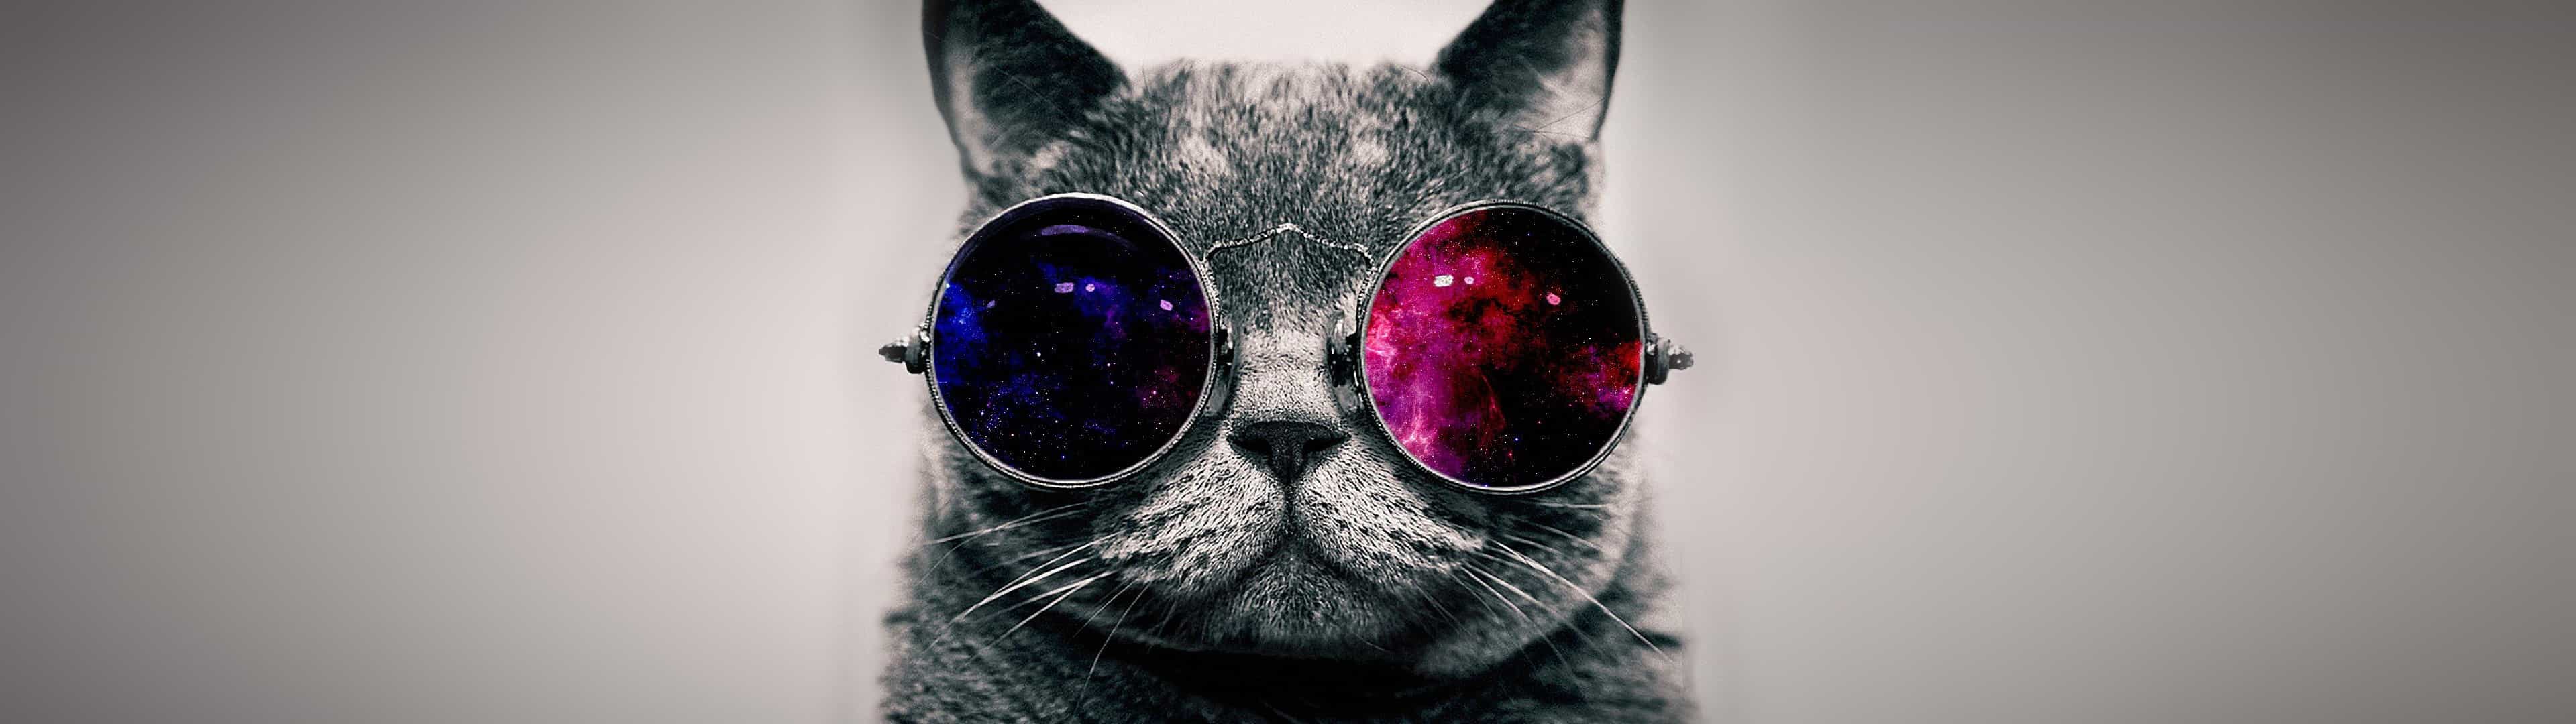 Cat Wearing Glasses Wallpapers - Top Free Cat Wearing Glasses Backgrounds - WallpaperAccess